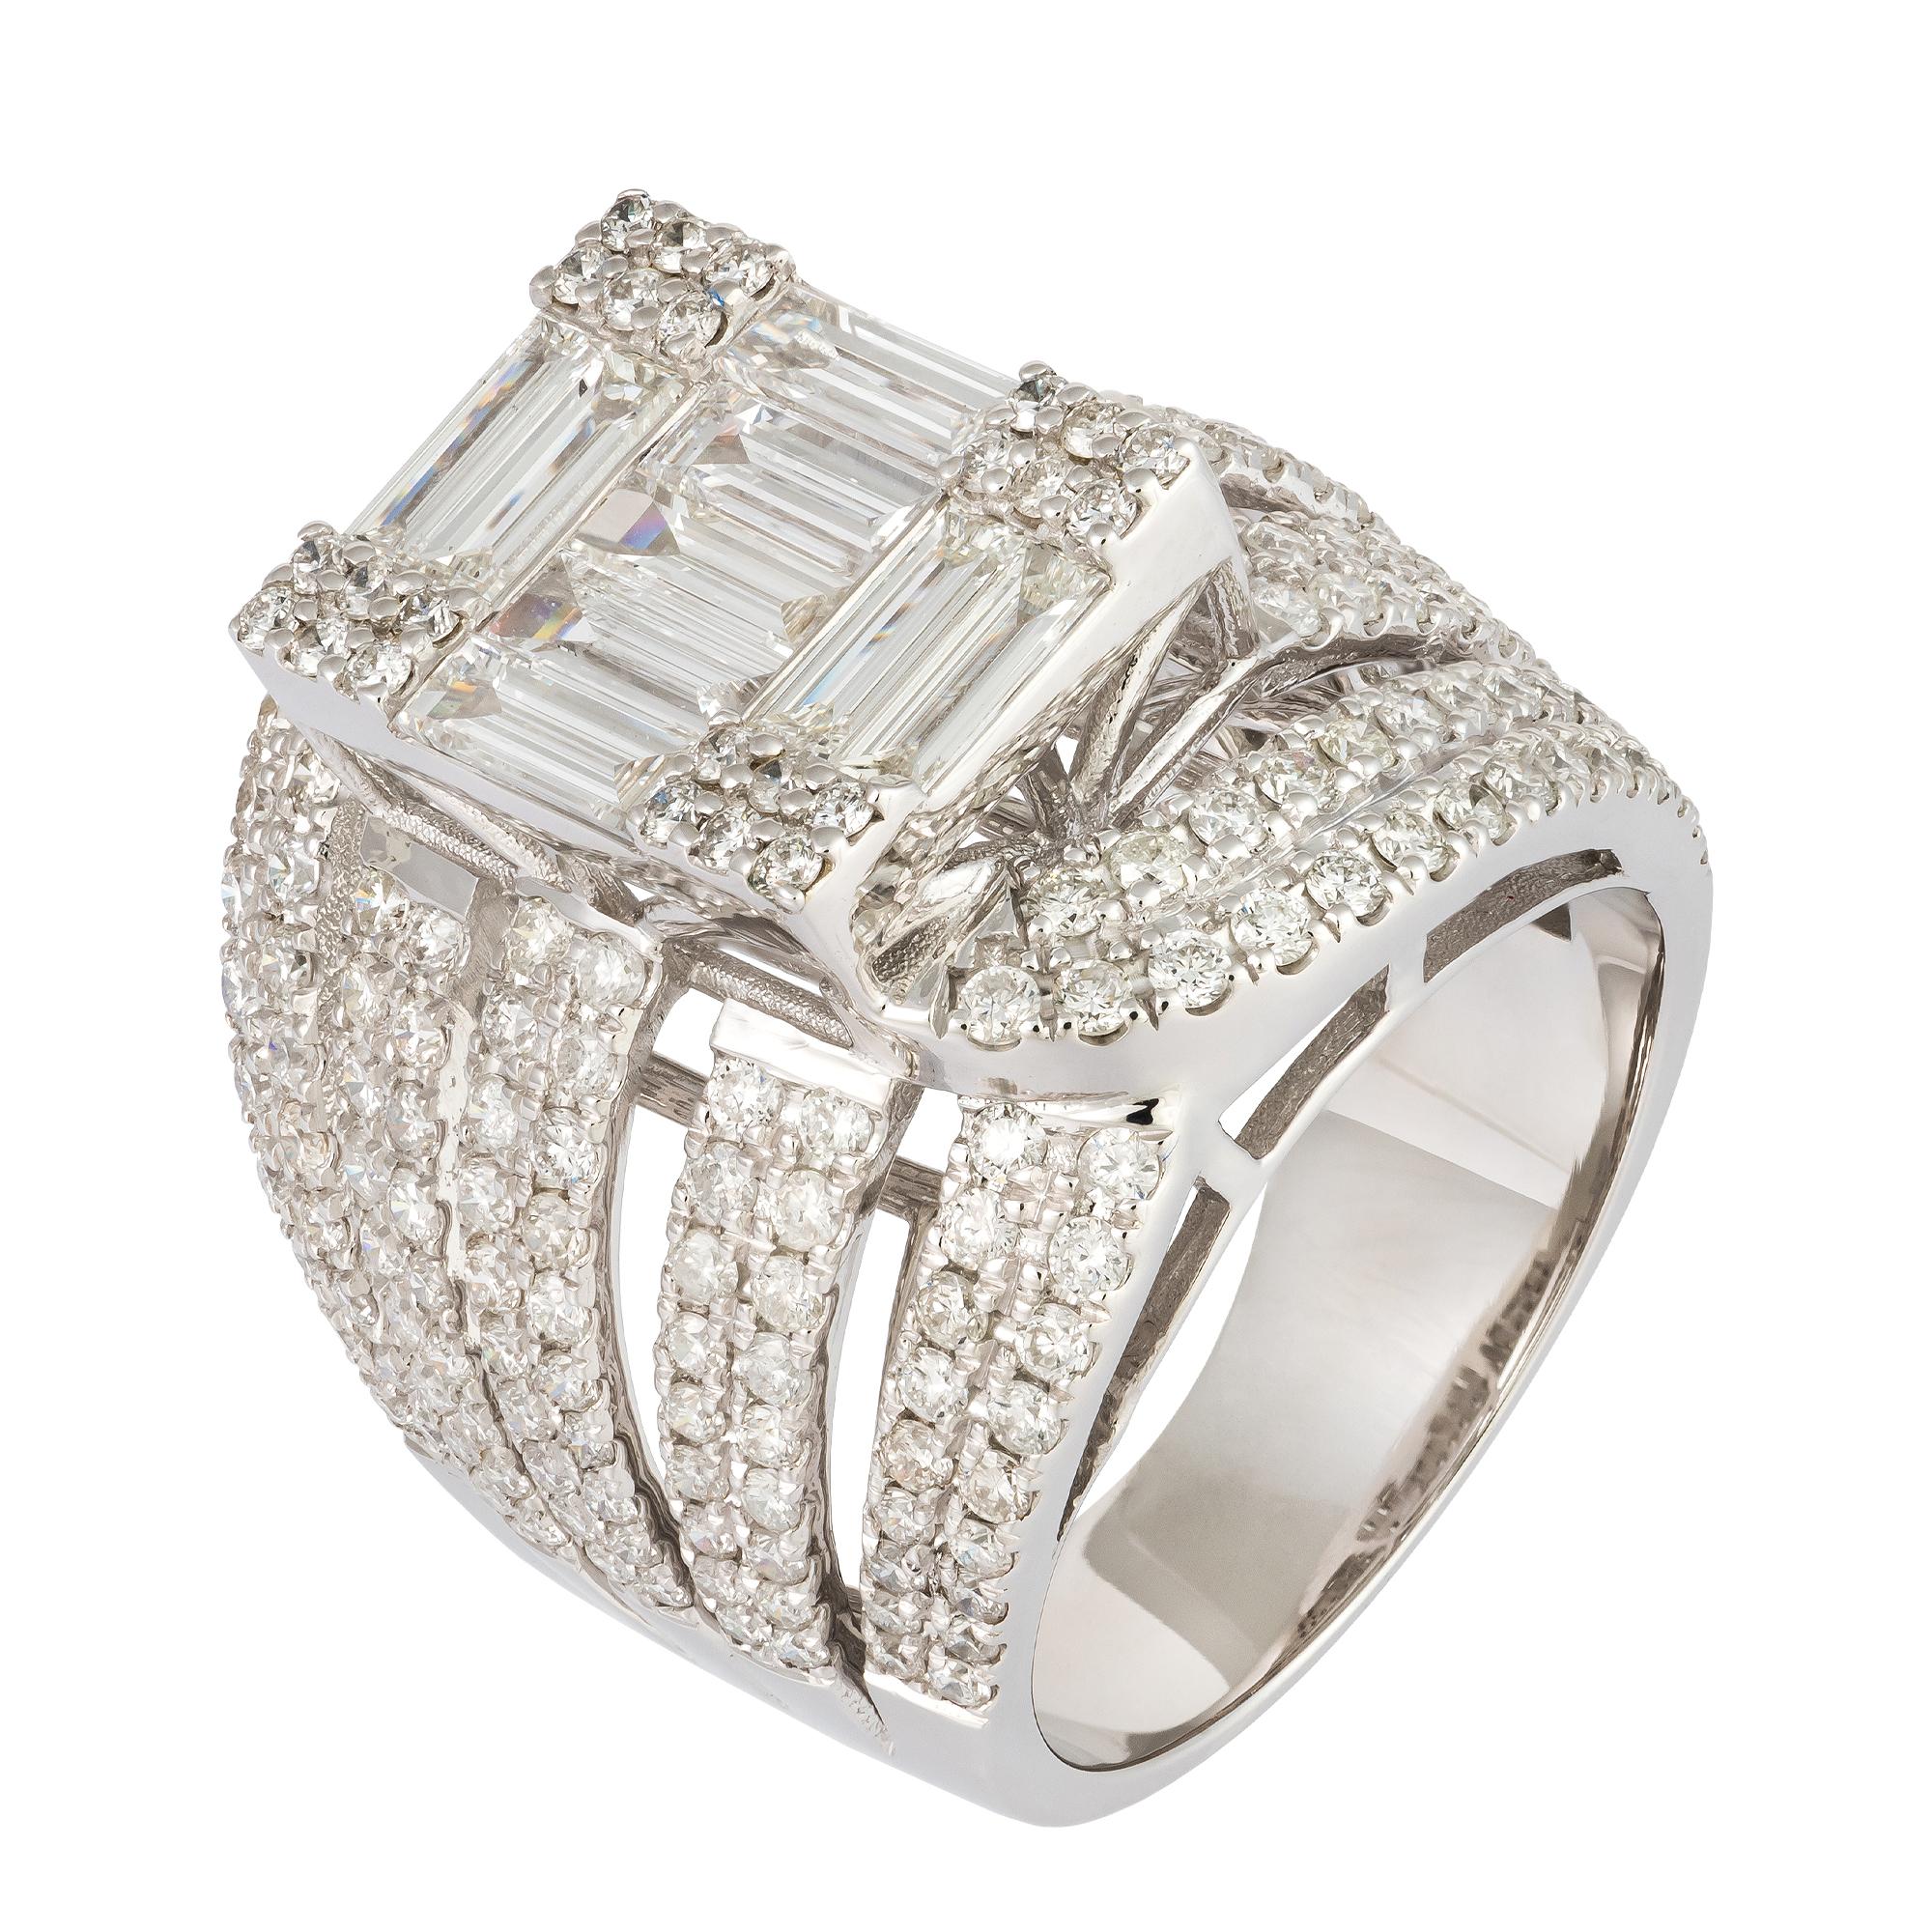 For Sale:  Unique White 18K Gold White Diamond Ring For Her 2